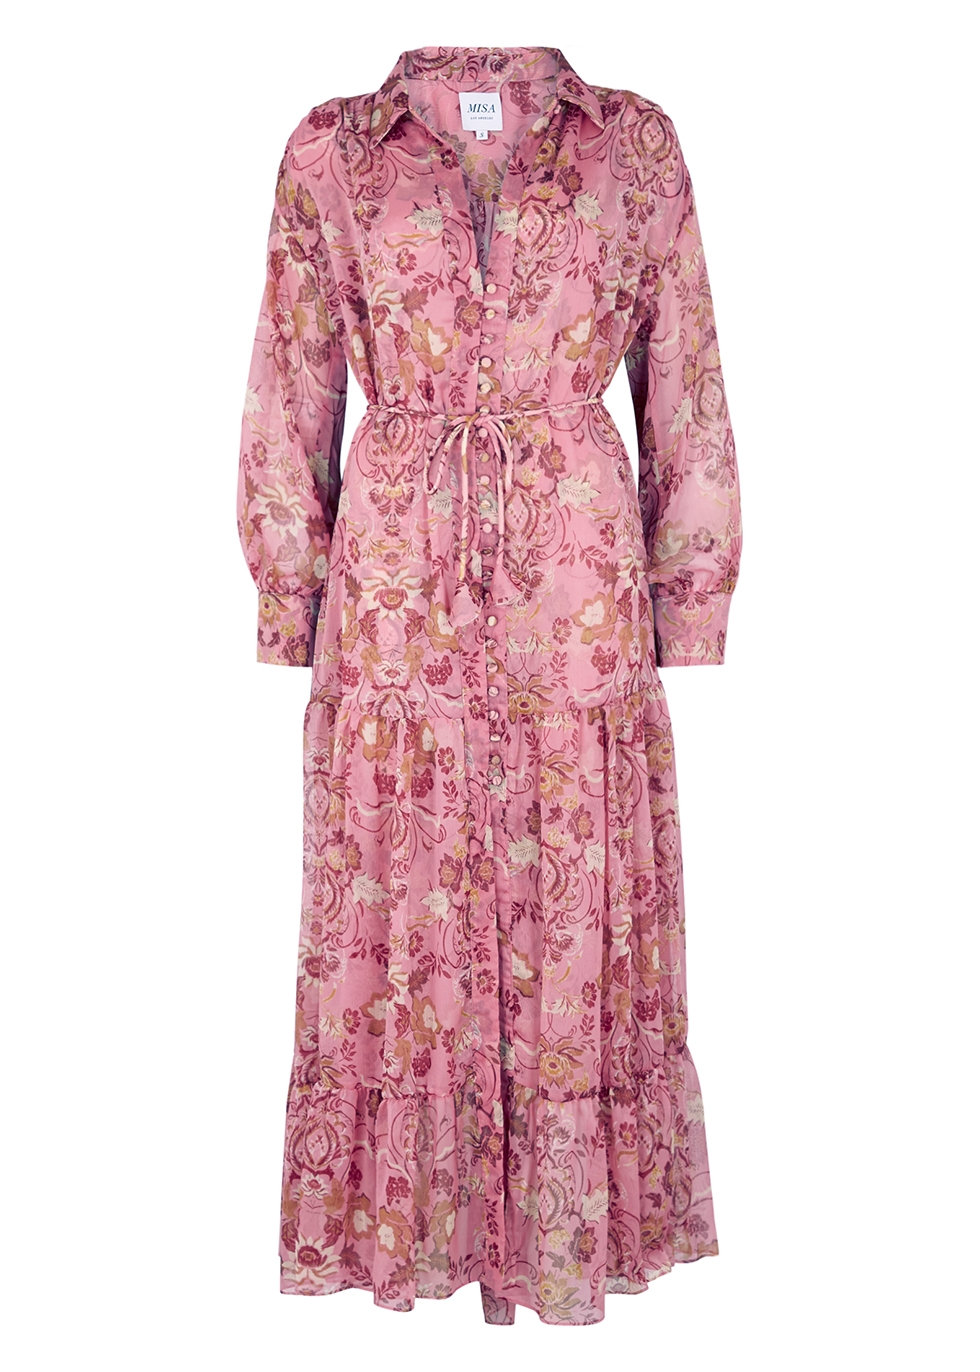 MISA Leigh pink floral-print chiffon dress - Harvey Nichols